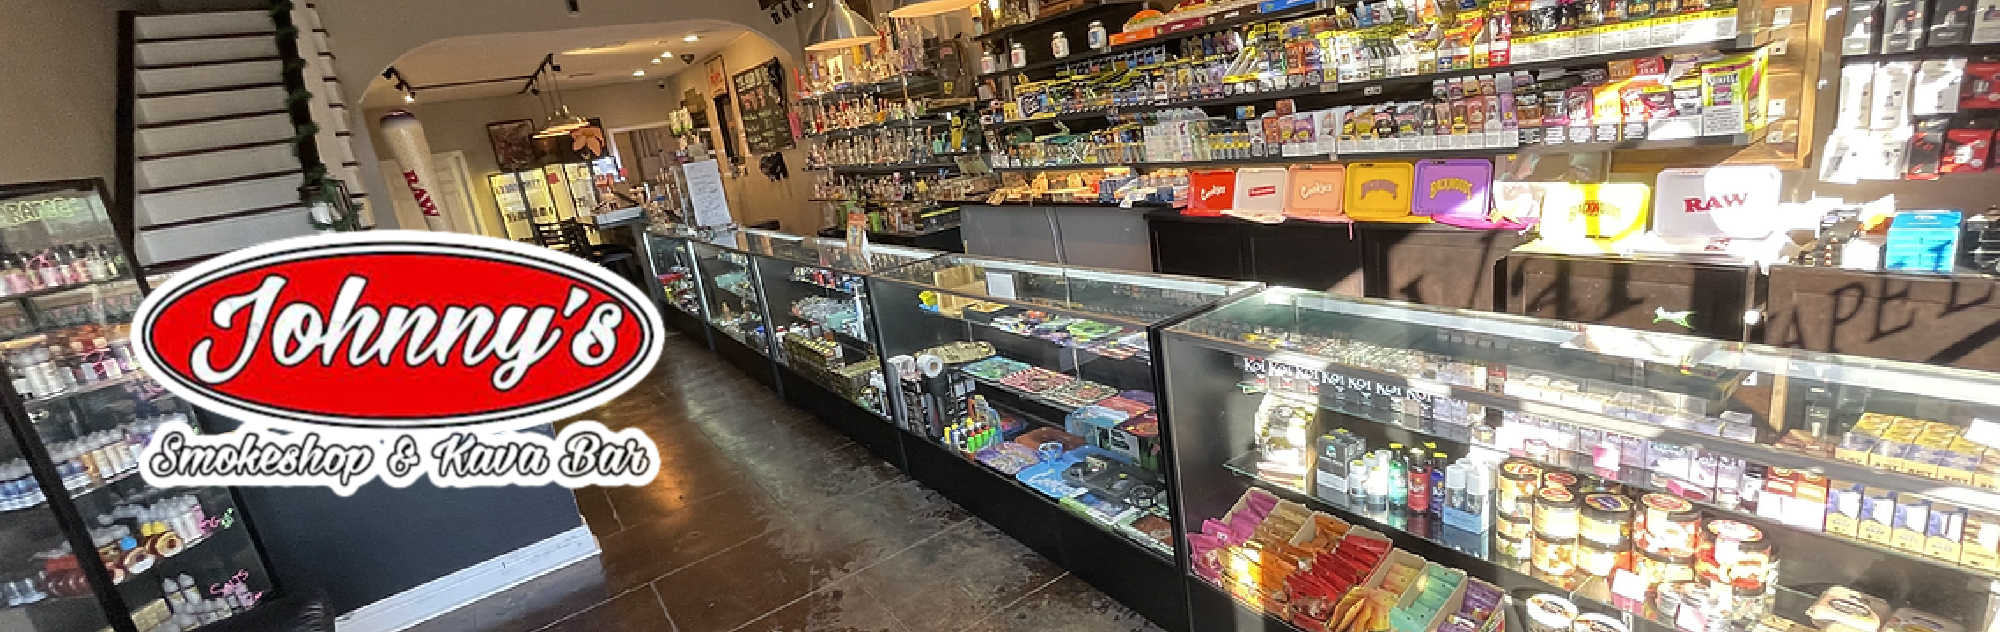 image of johnys smoke shop & kava bar